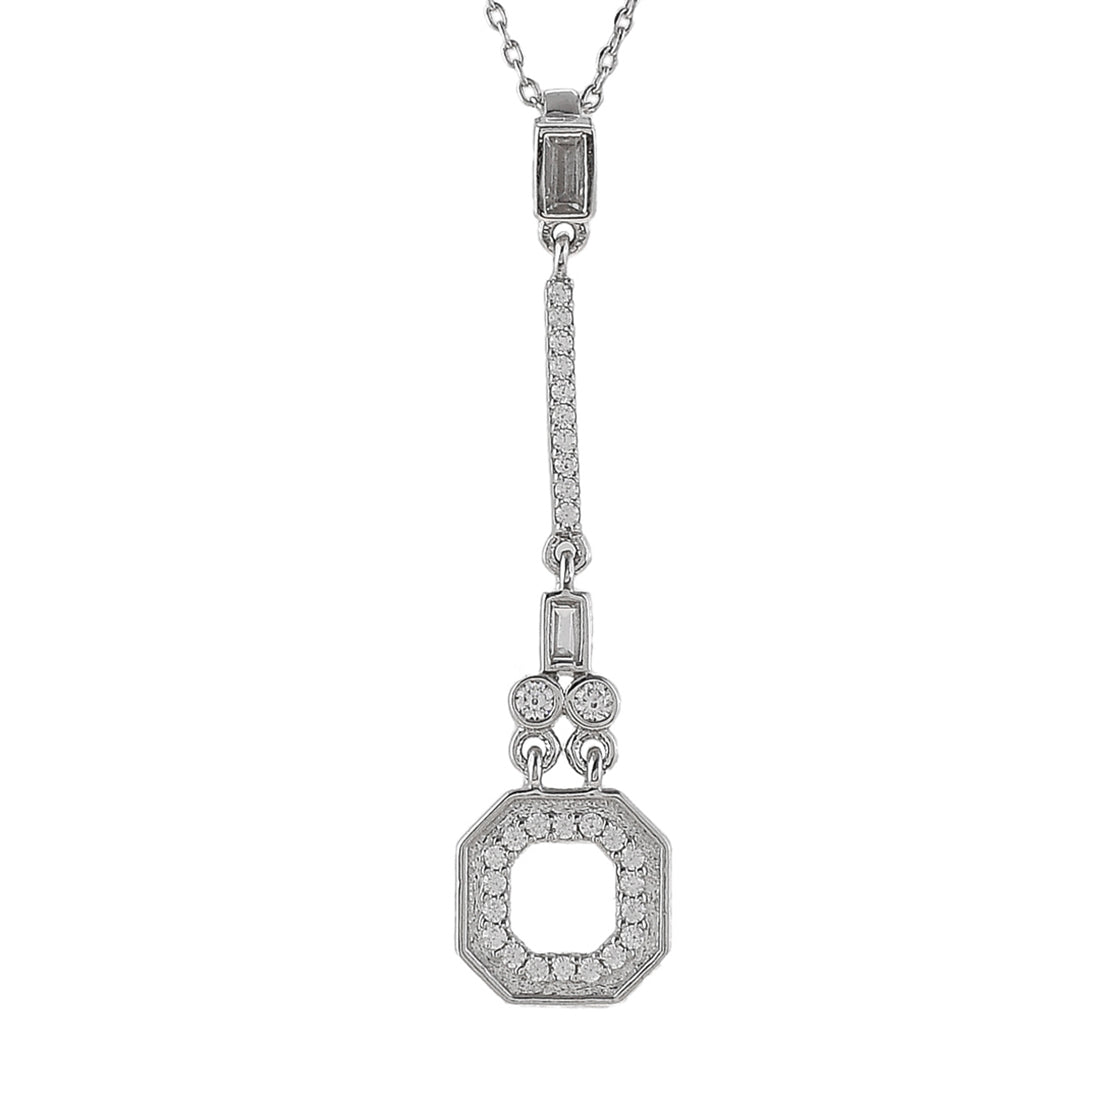 Women's 925 Sterling Silver Round Cut Cz Rectangular Pendant With Chain - Voylla